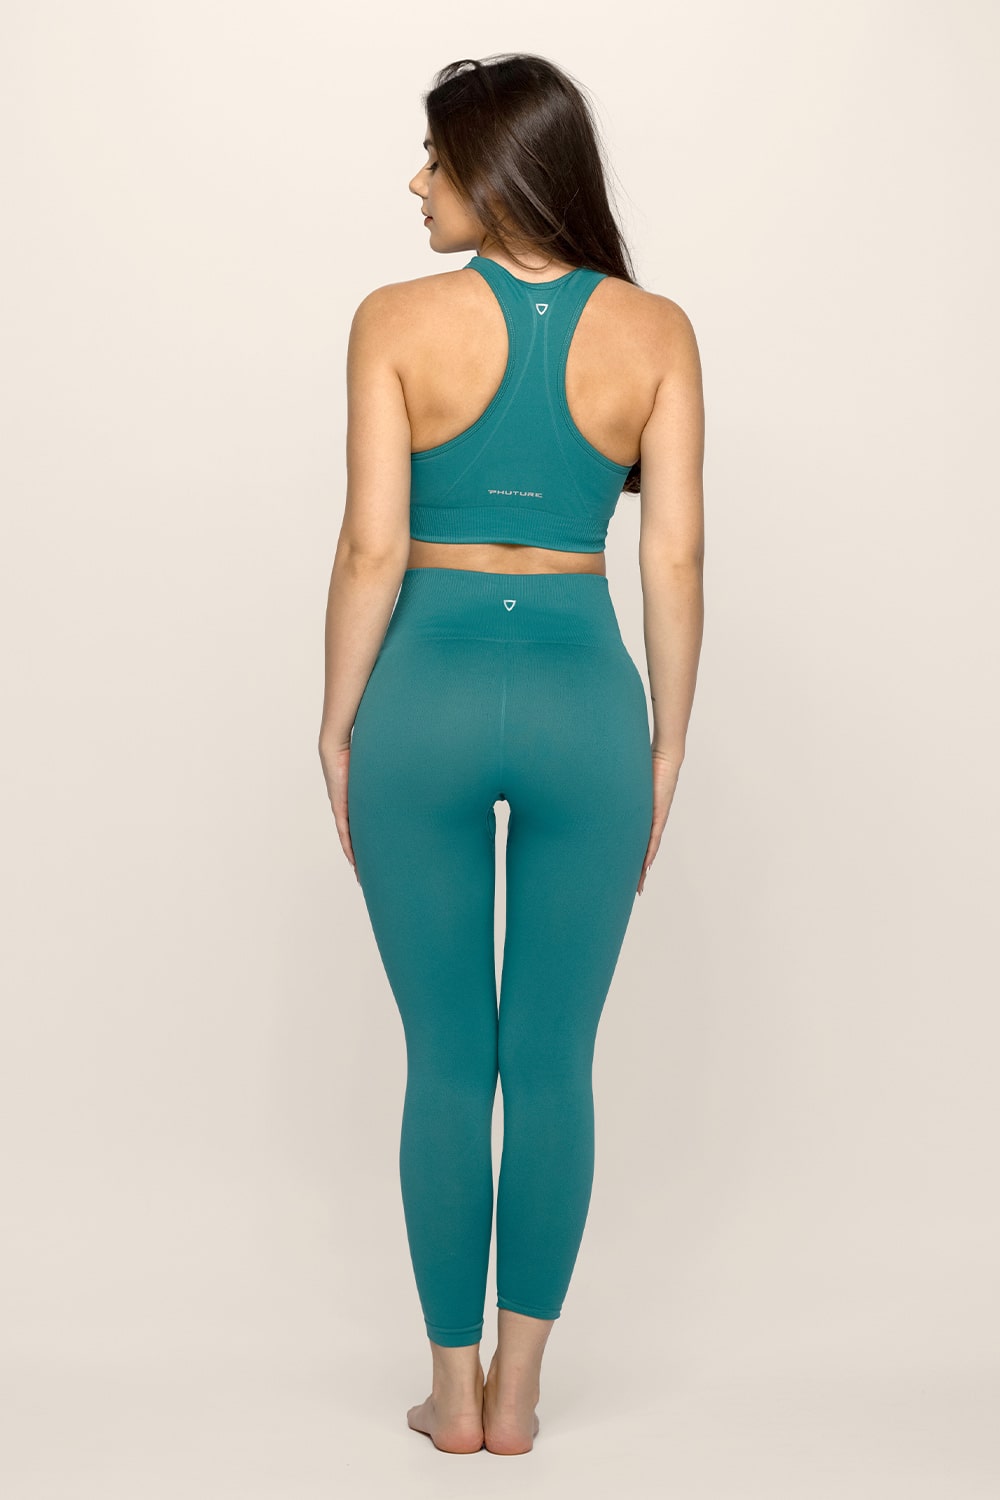 AMARA Seamless Outfit - Turquoise